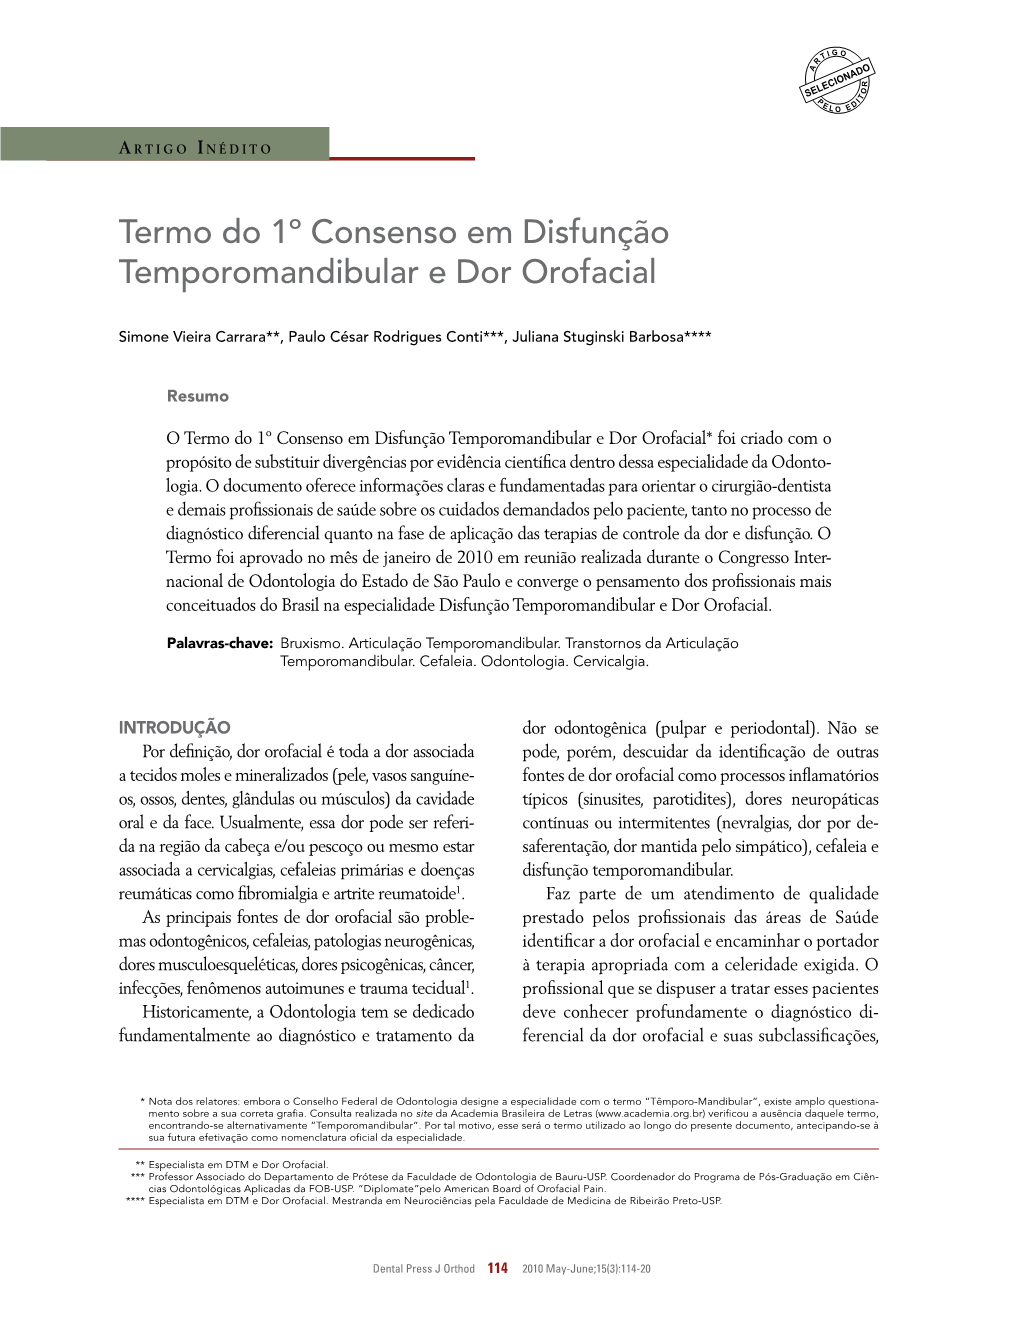 Statement of the 1St Consensus on Temporomandibular Disorders and Orofacial Pain